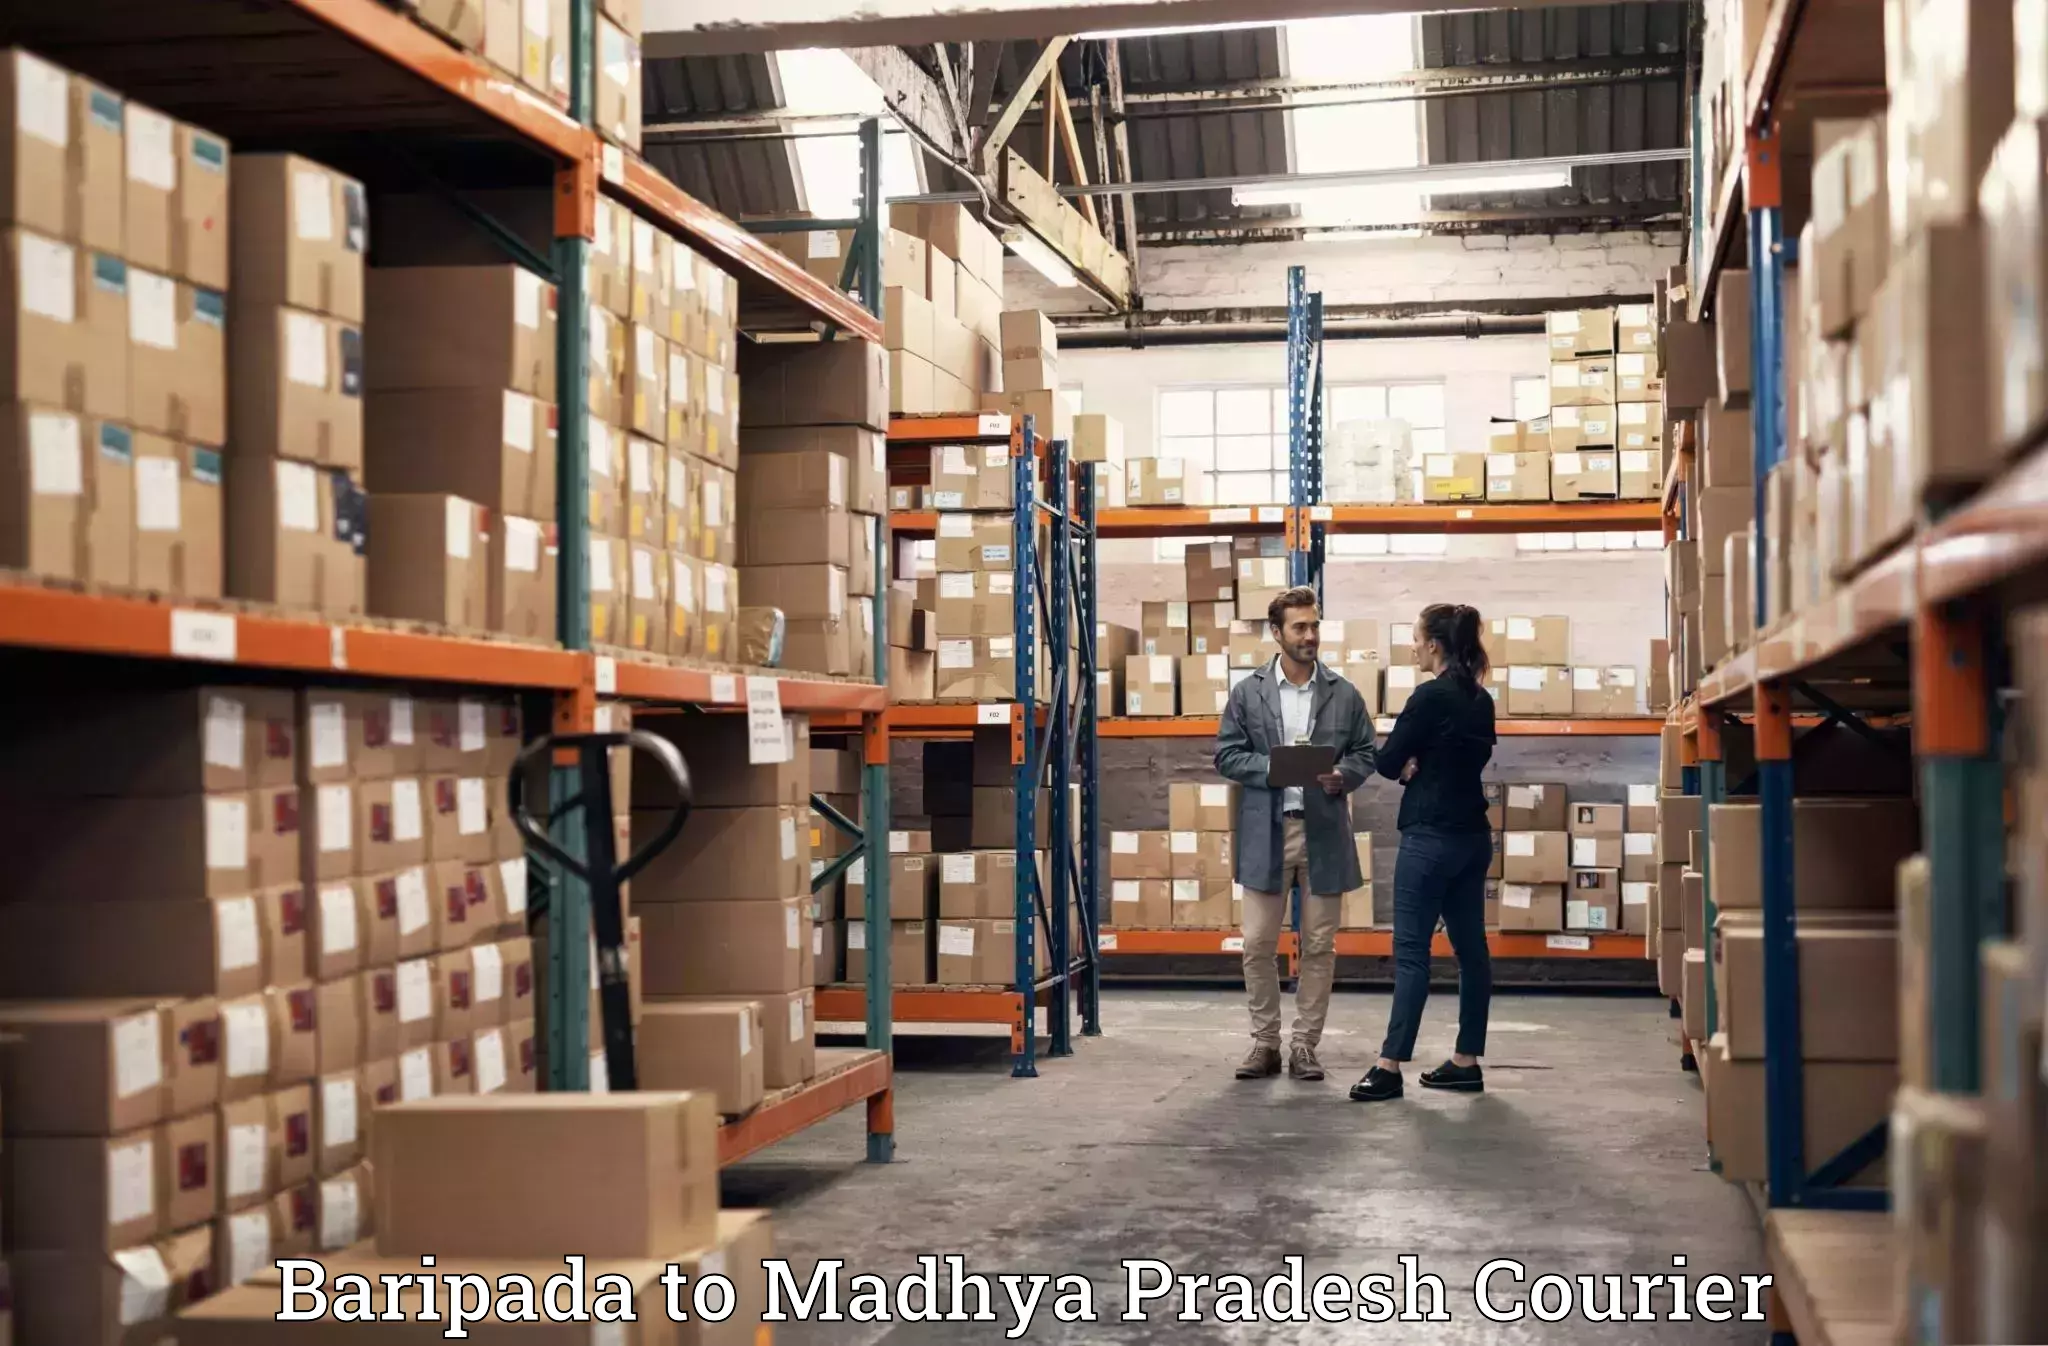 Trusted moving company Baripada to Silwani